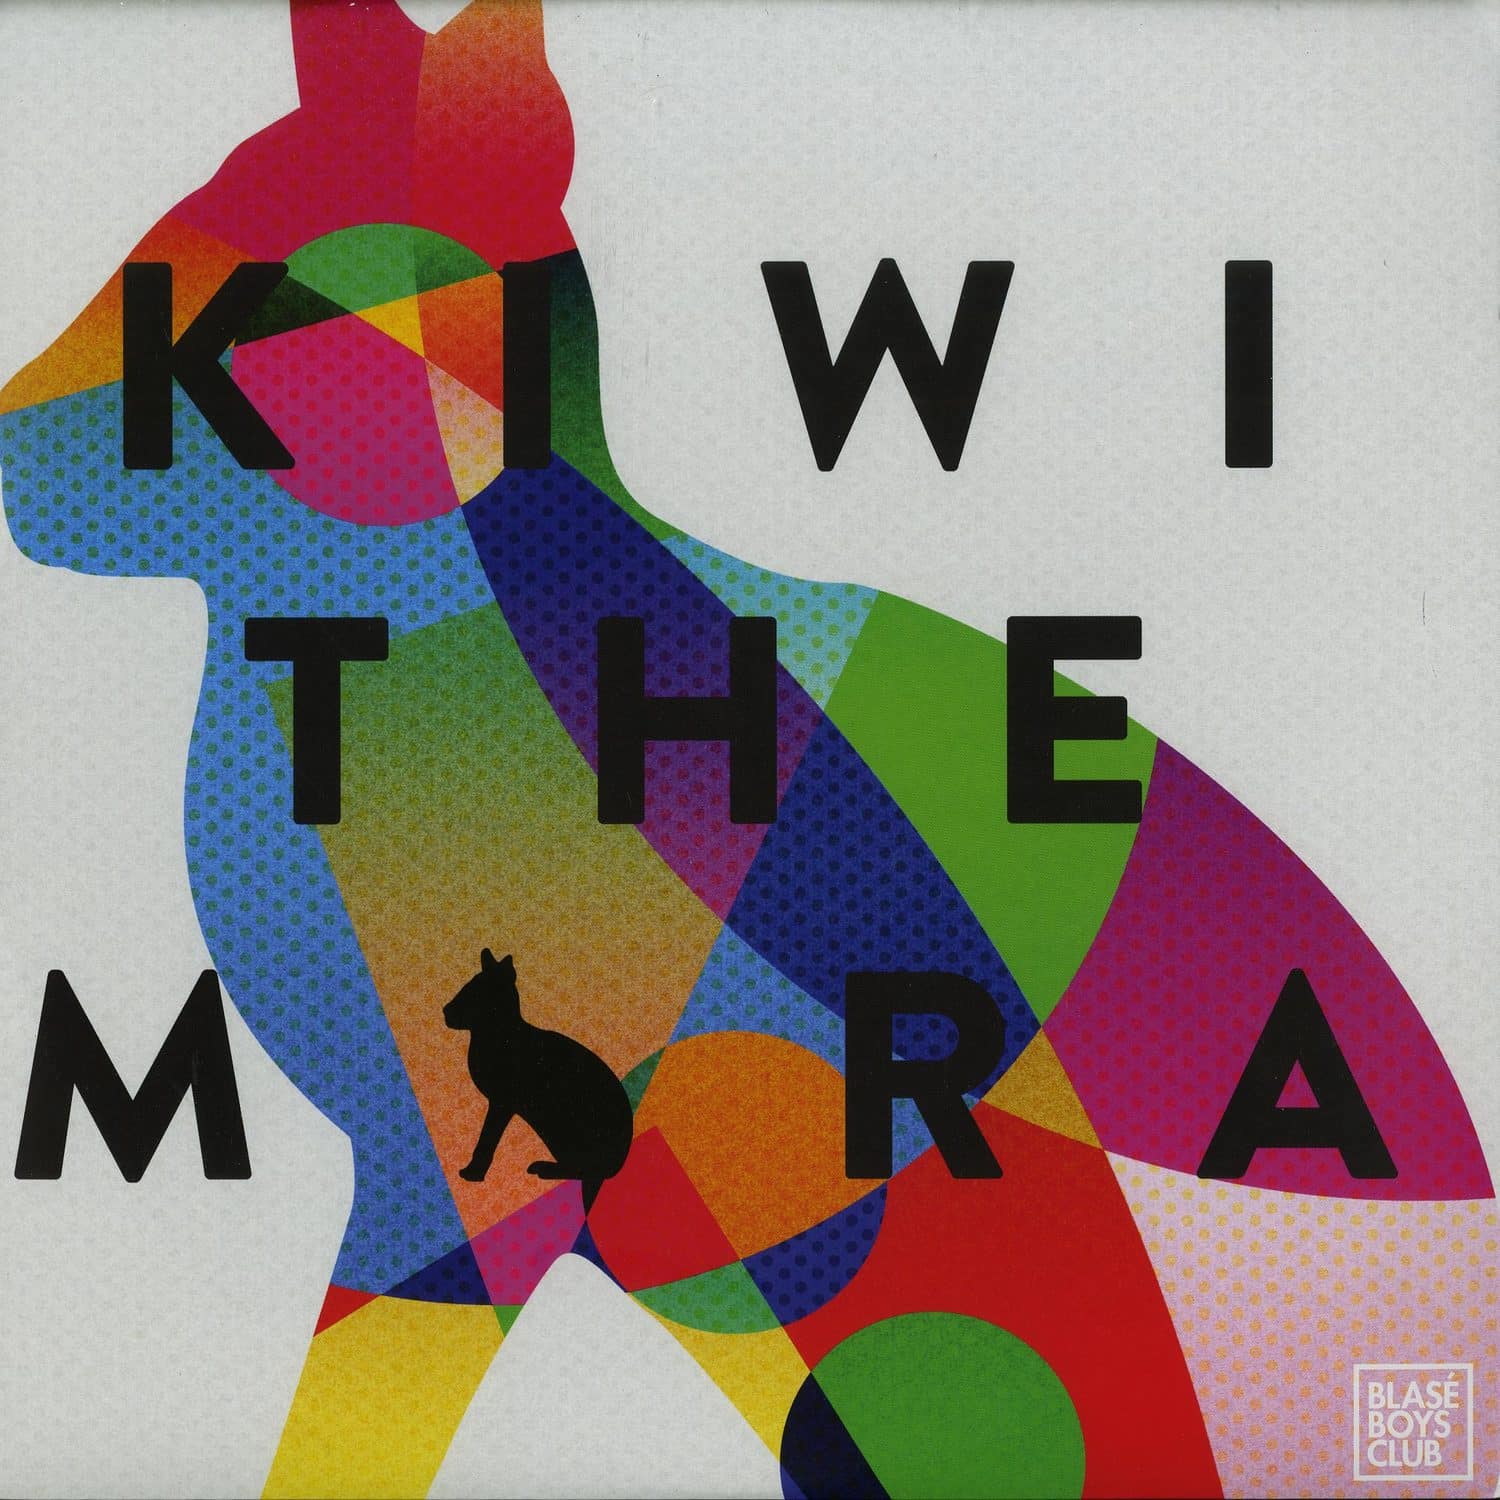 Kiwi - THE MARA